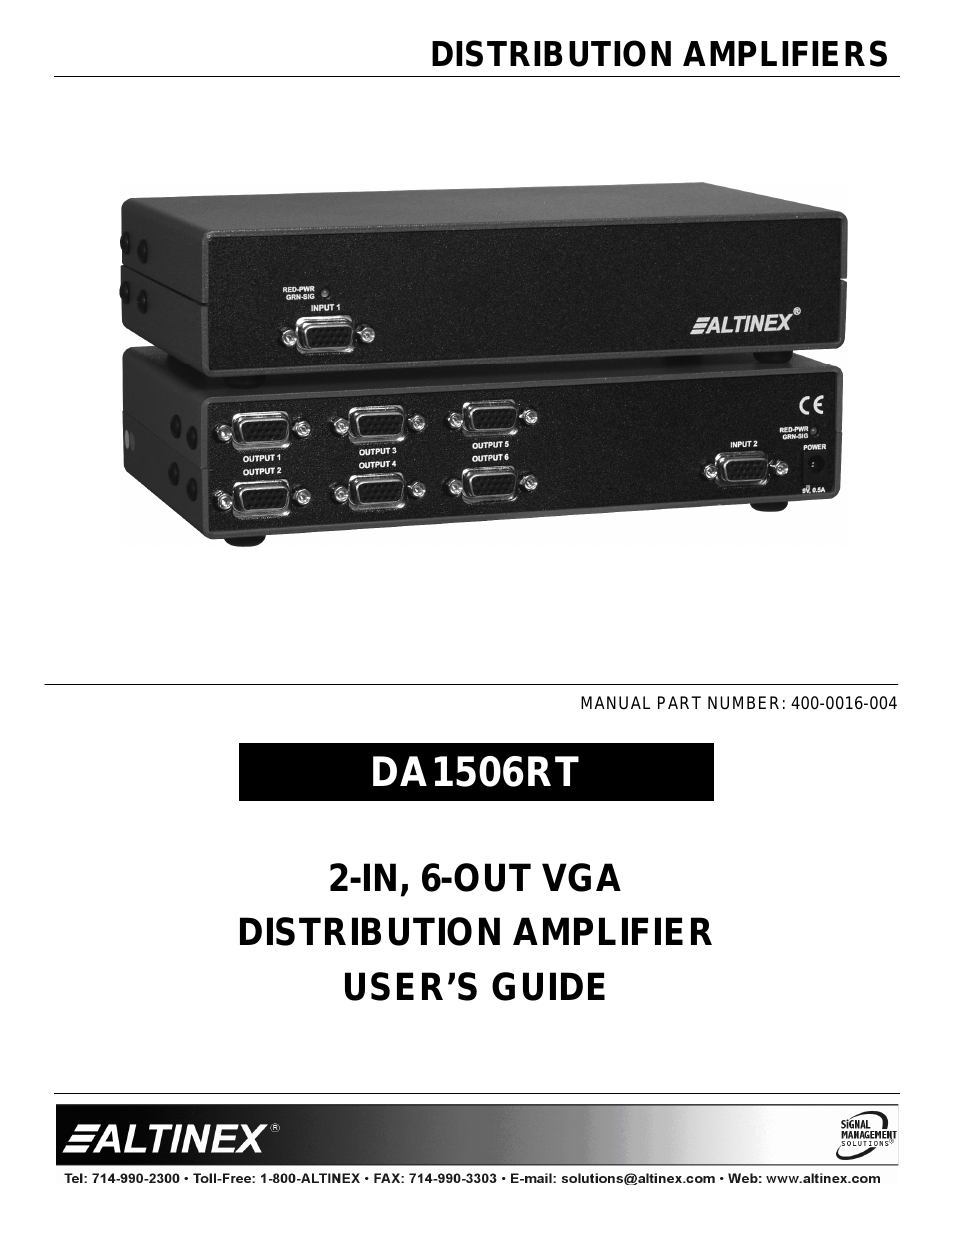 Distribution Amplifier DA1506RT